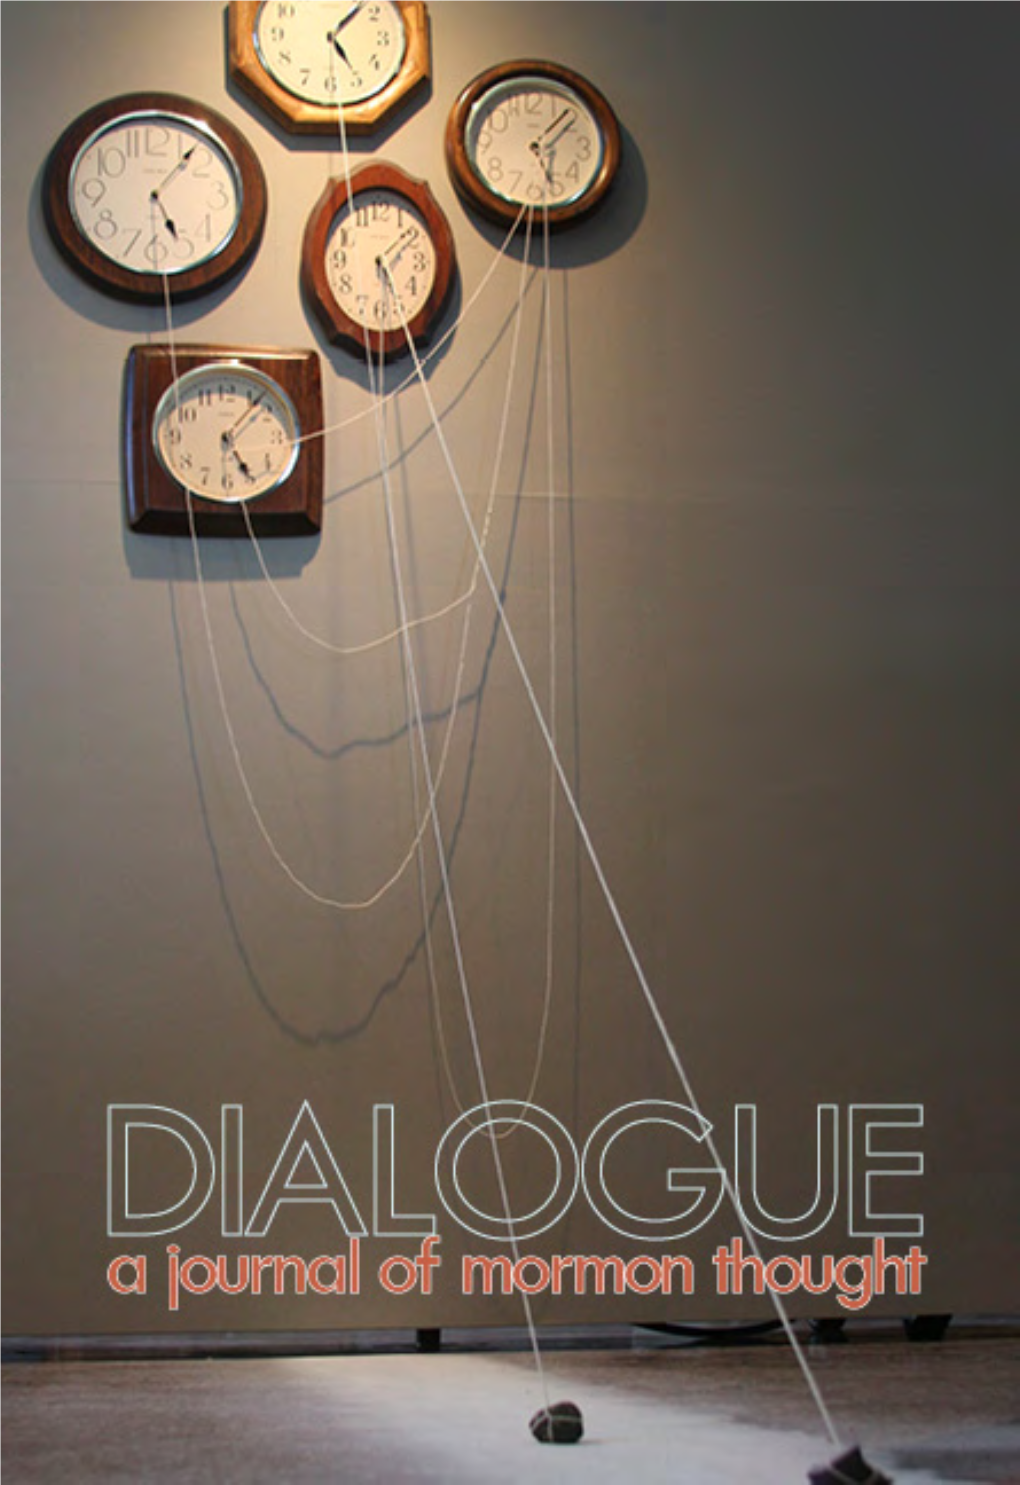 Dialogue Fall 2013A.Vp